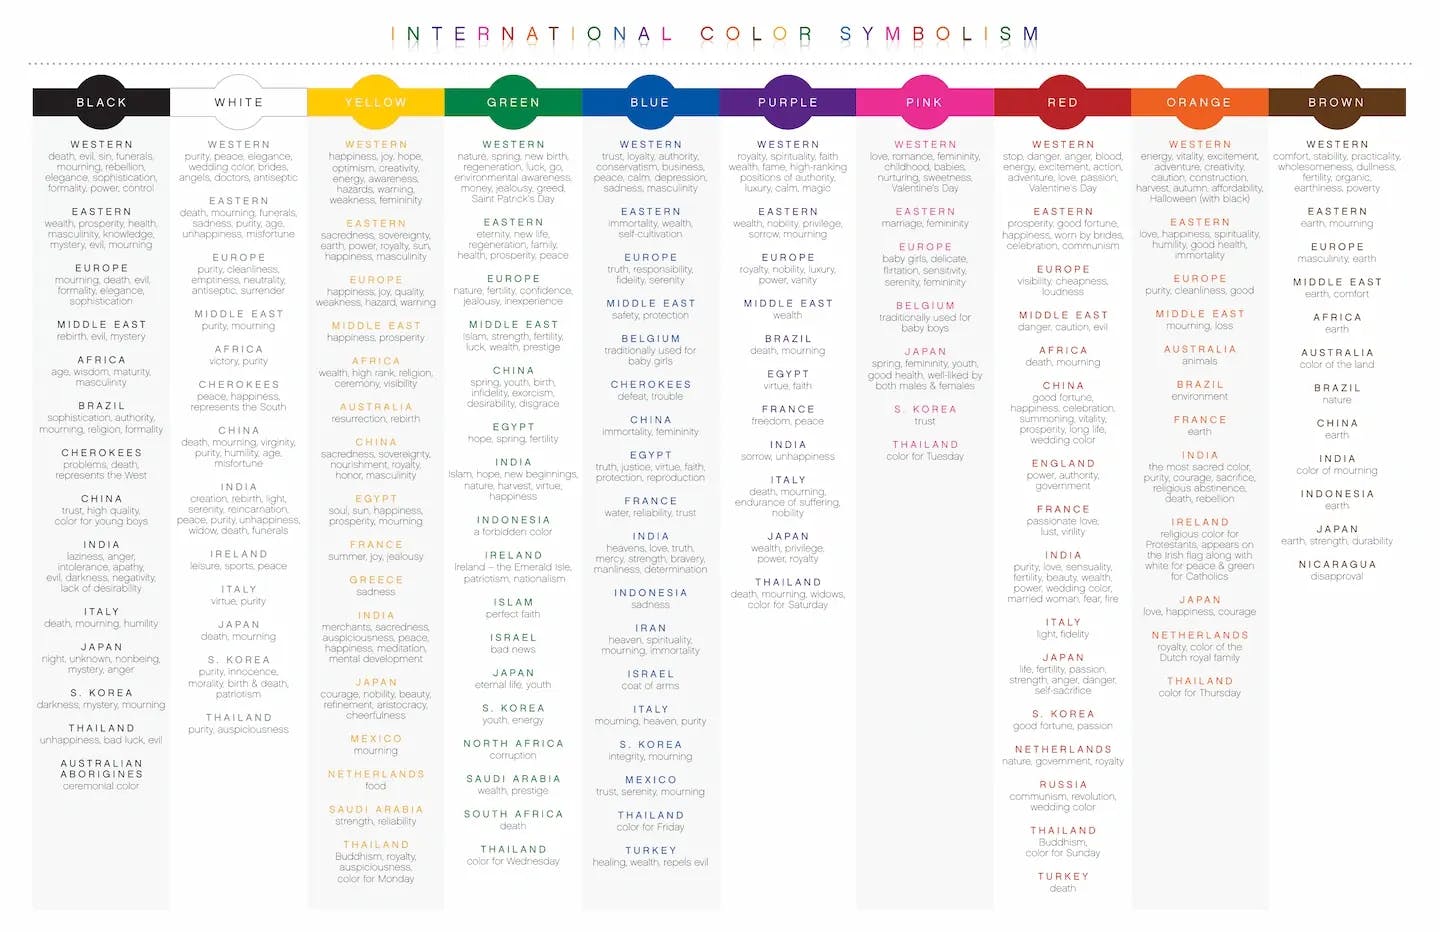 Quelle: six-degrees.com/pdf/International-Color-Symbolism-Chart.pdf